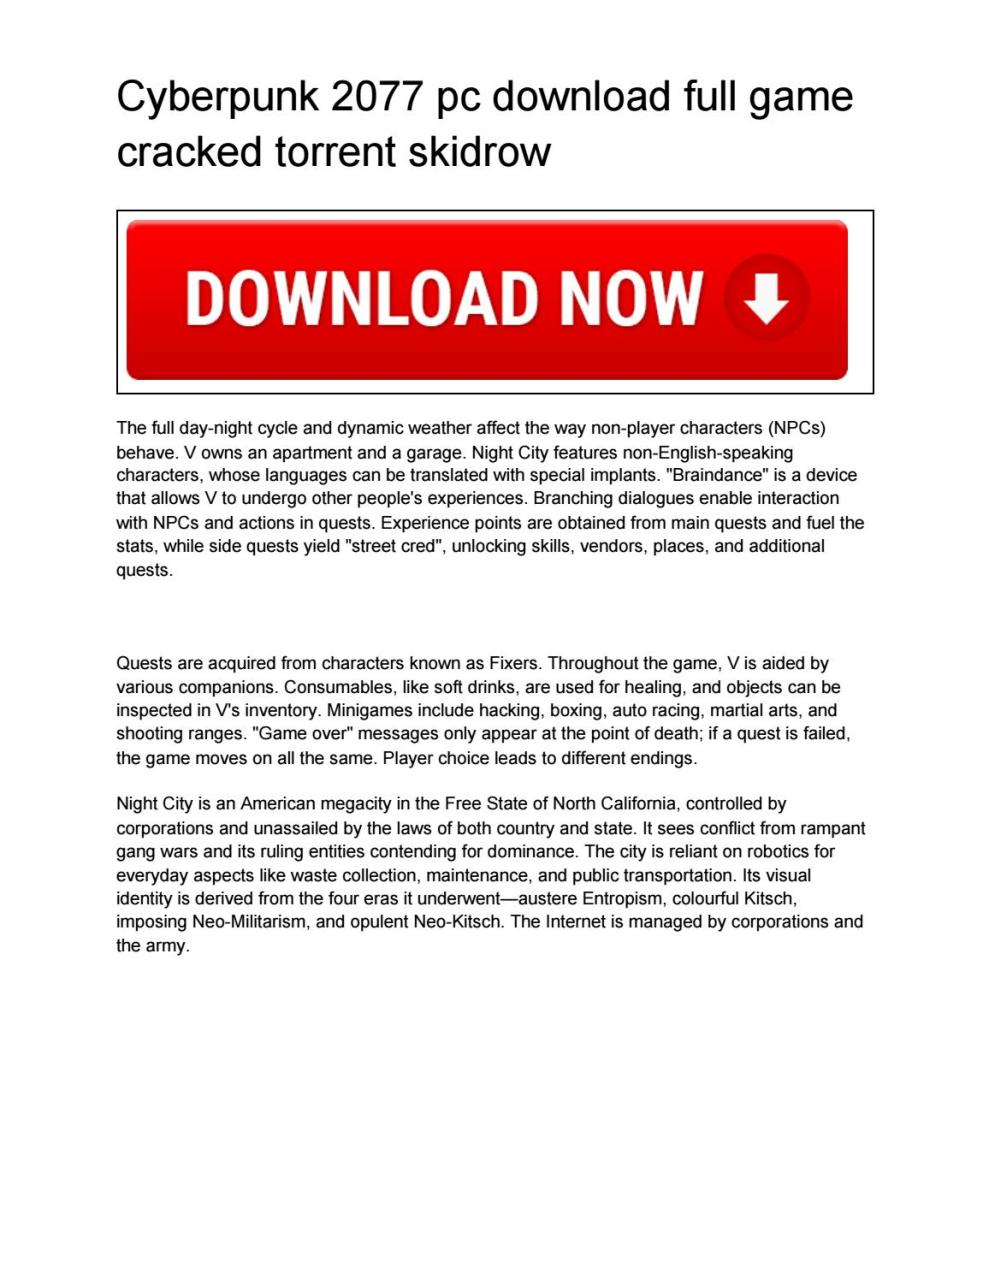 Cyberpunk 2077 Pc Download Full Game Cracked Torrent Skidrow By Cyberpunkpc  - Issuu